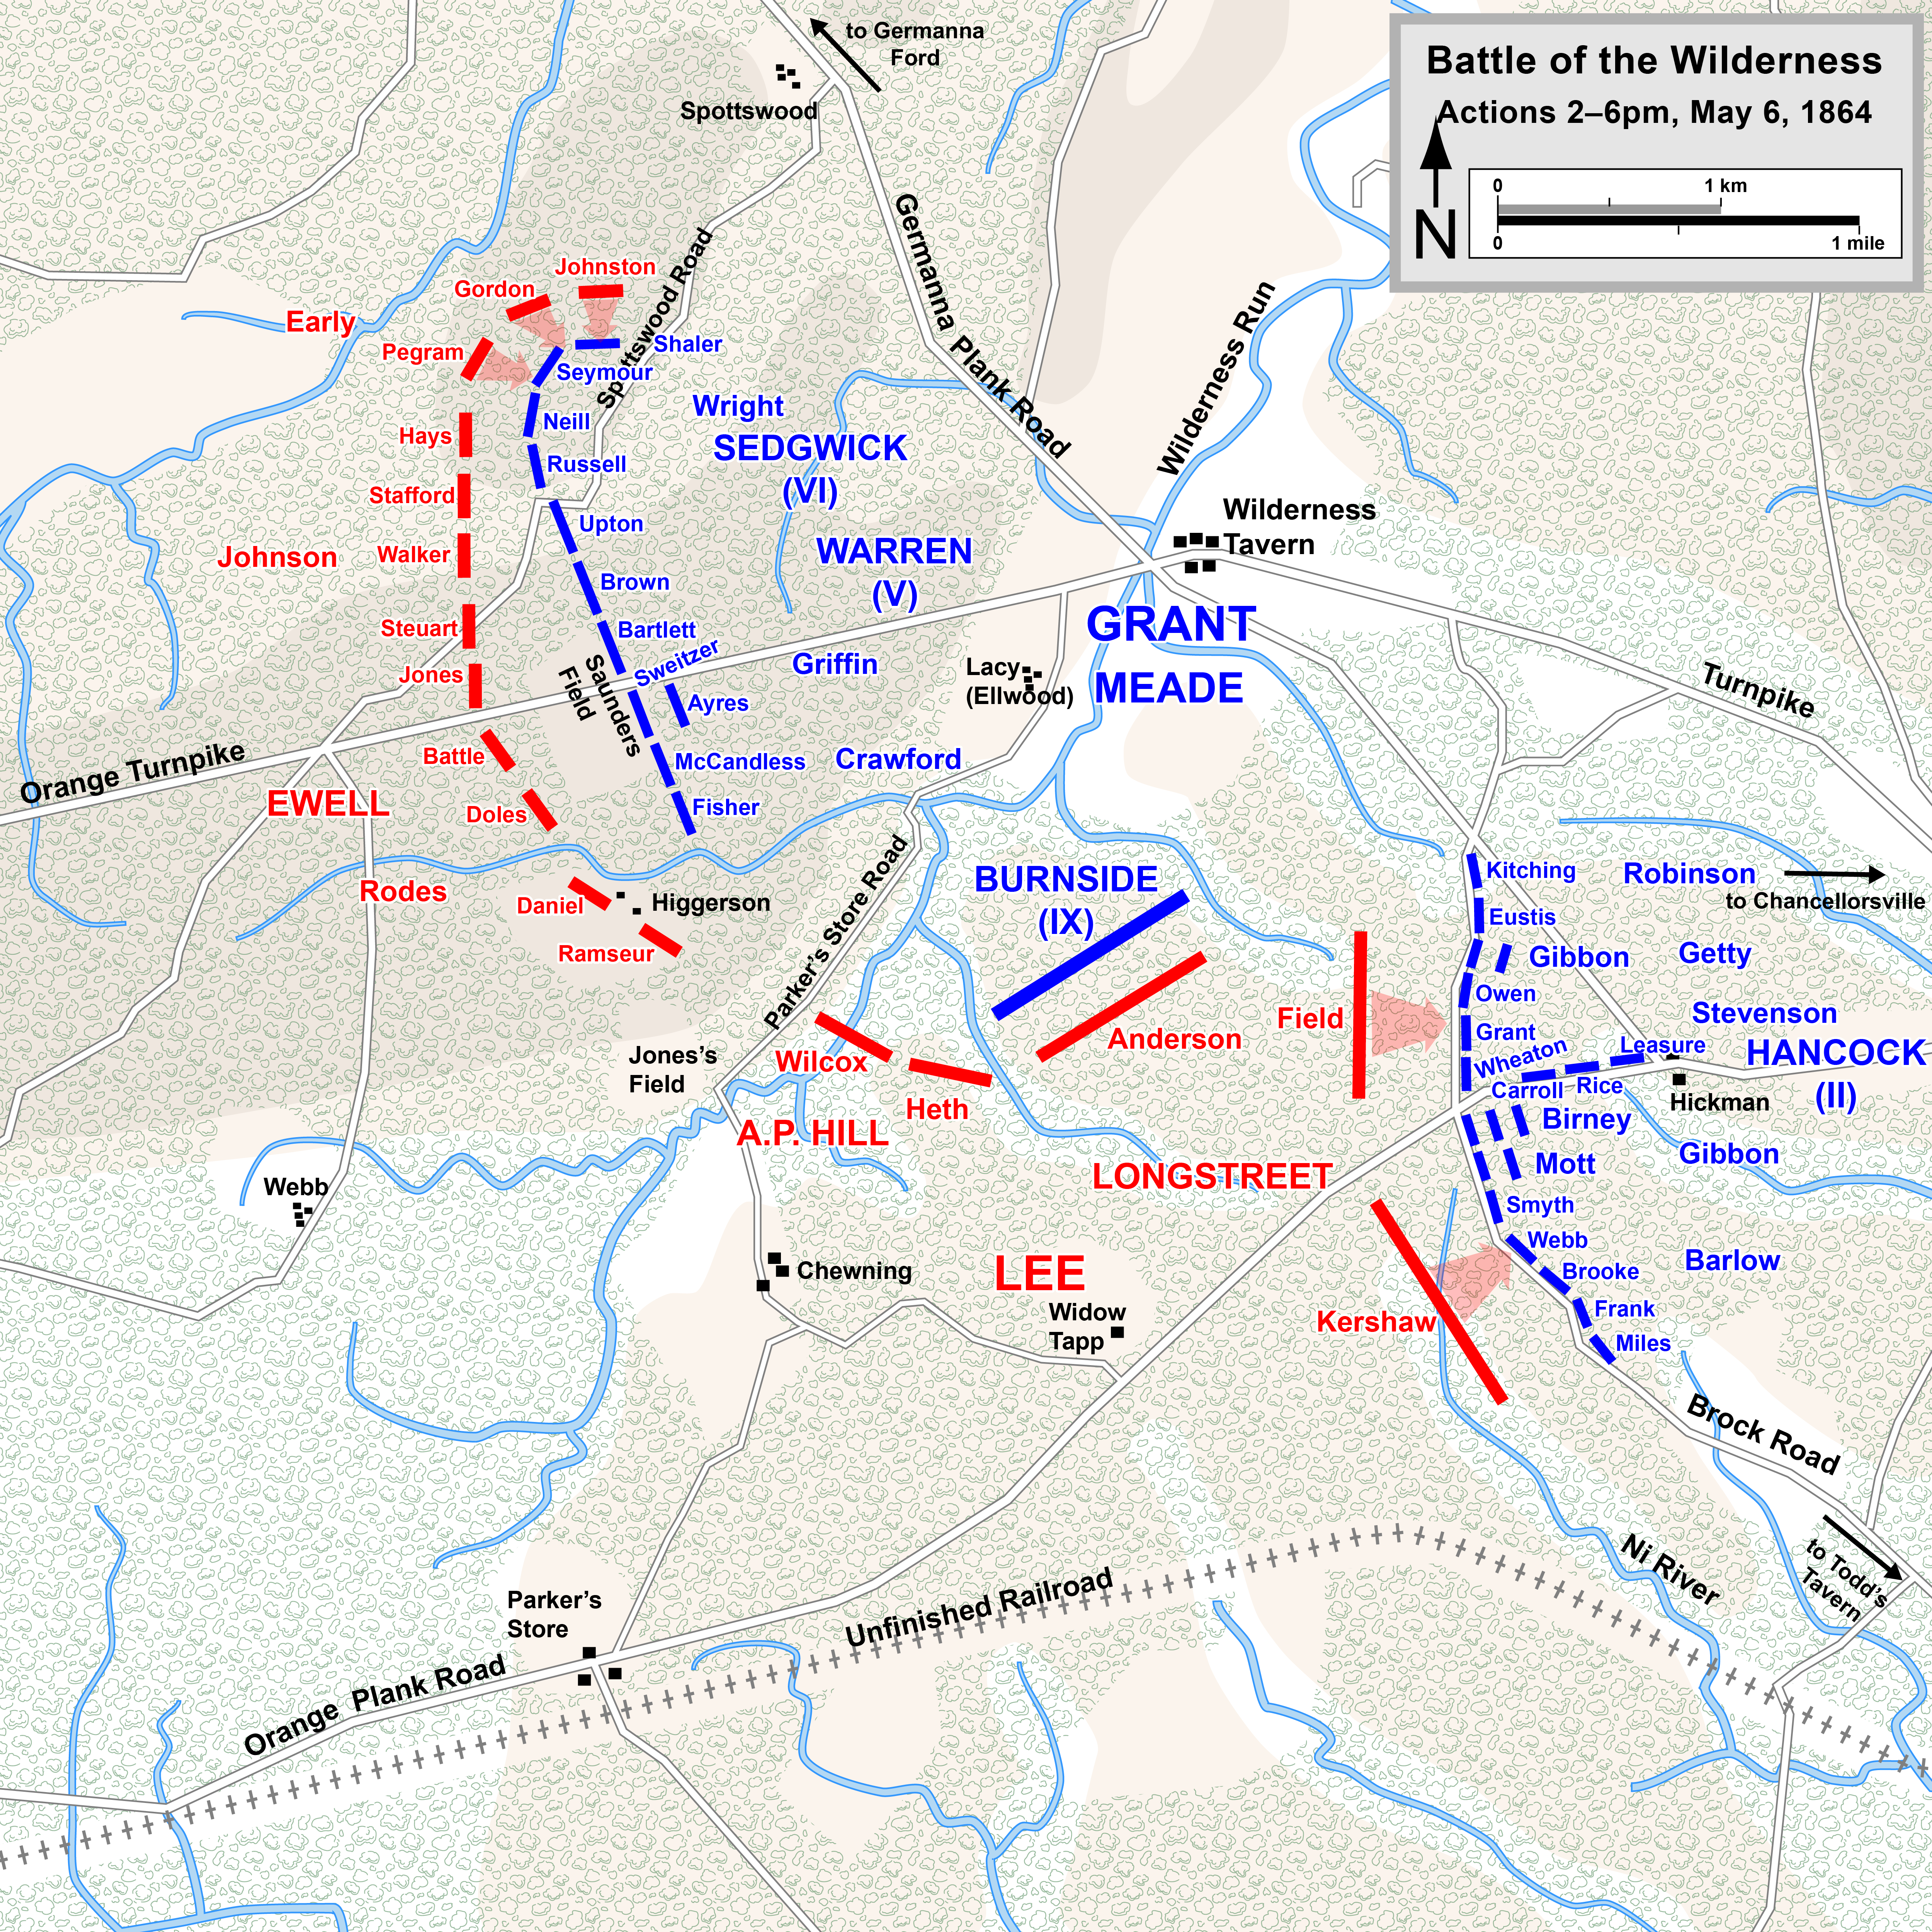 1864 Wilderness
                      Battlefield Map